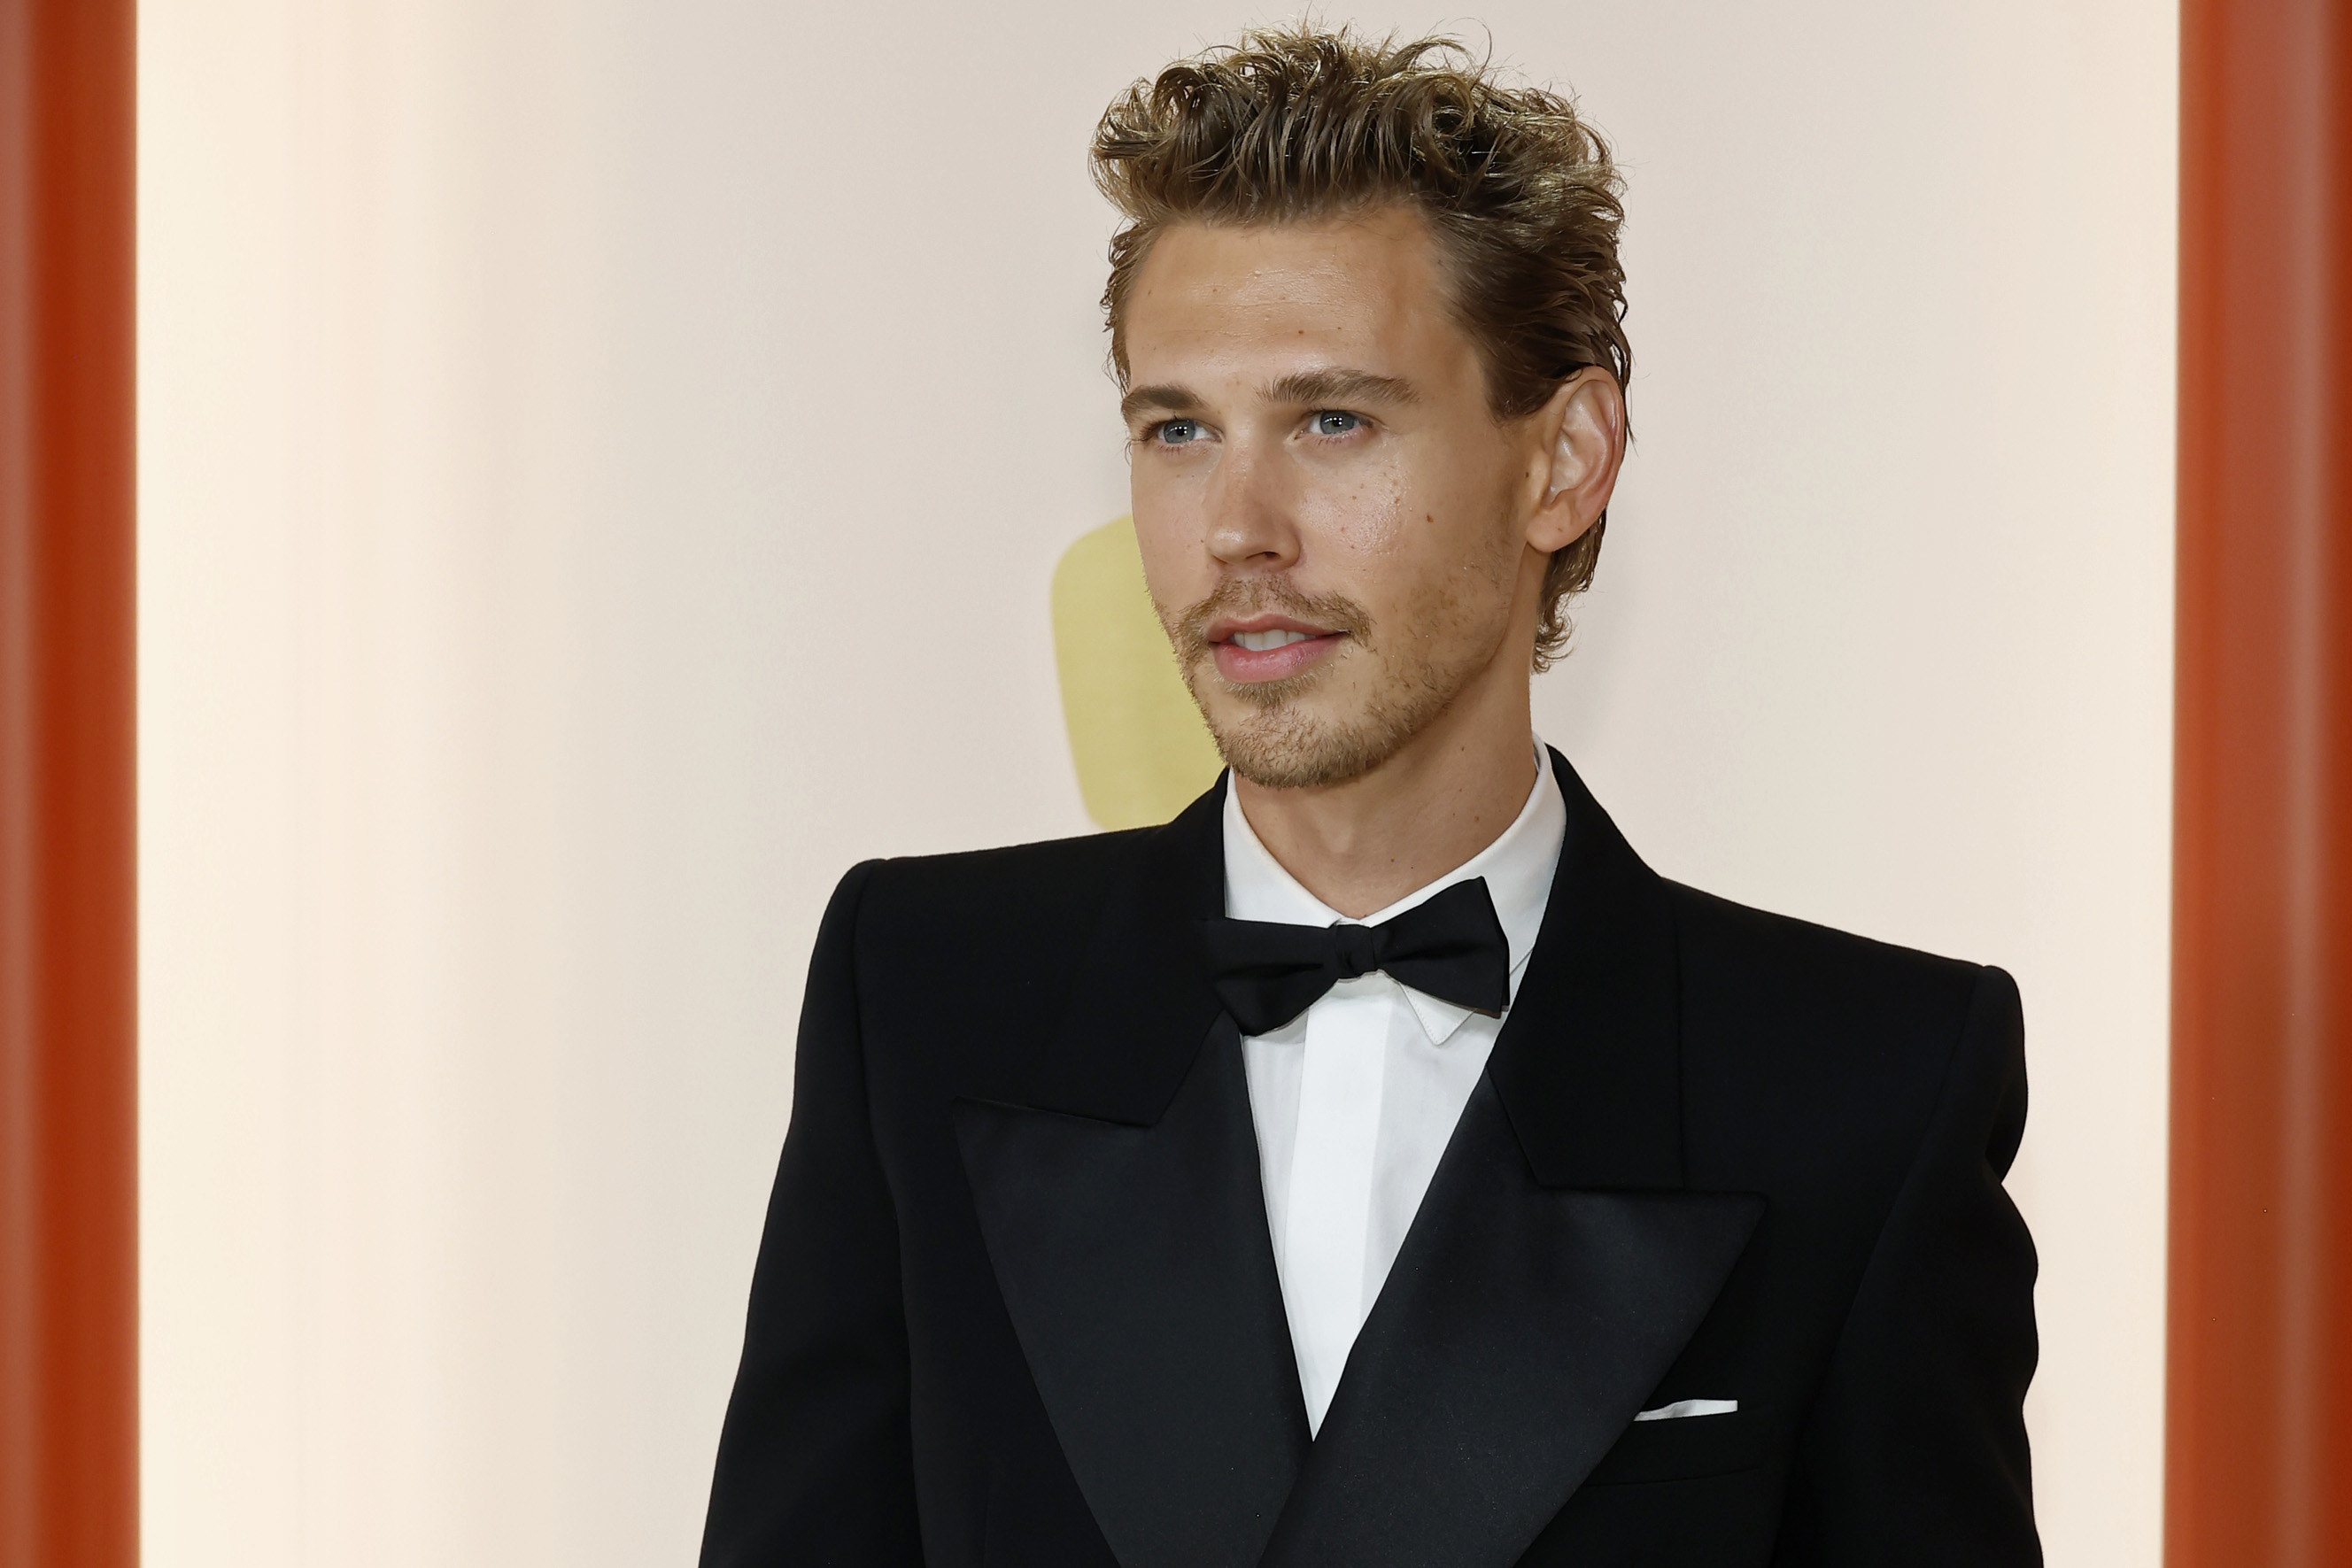 Austin Butler attends Academy Awards in a tuxedo